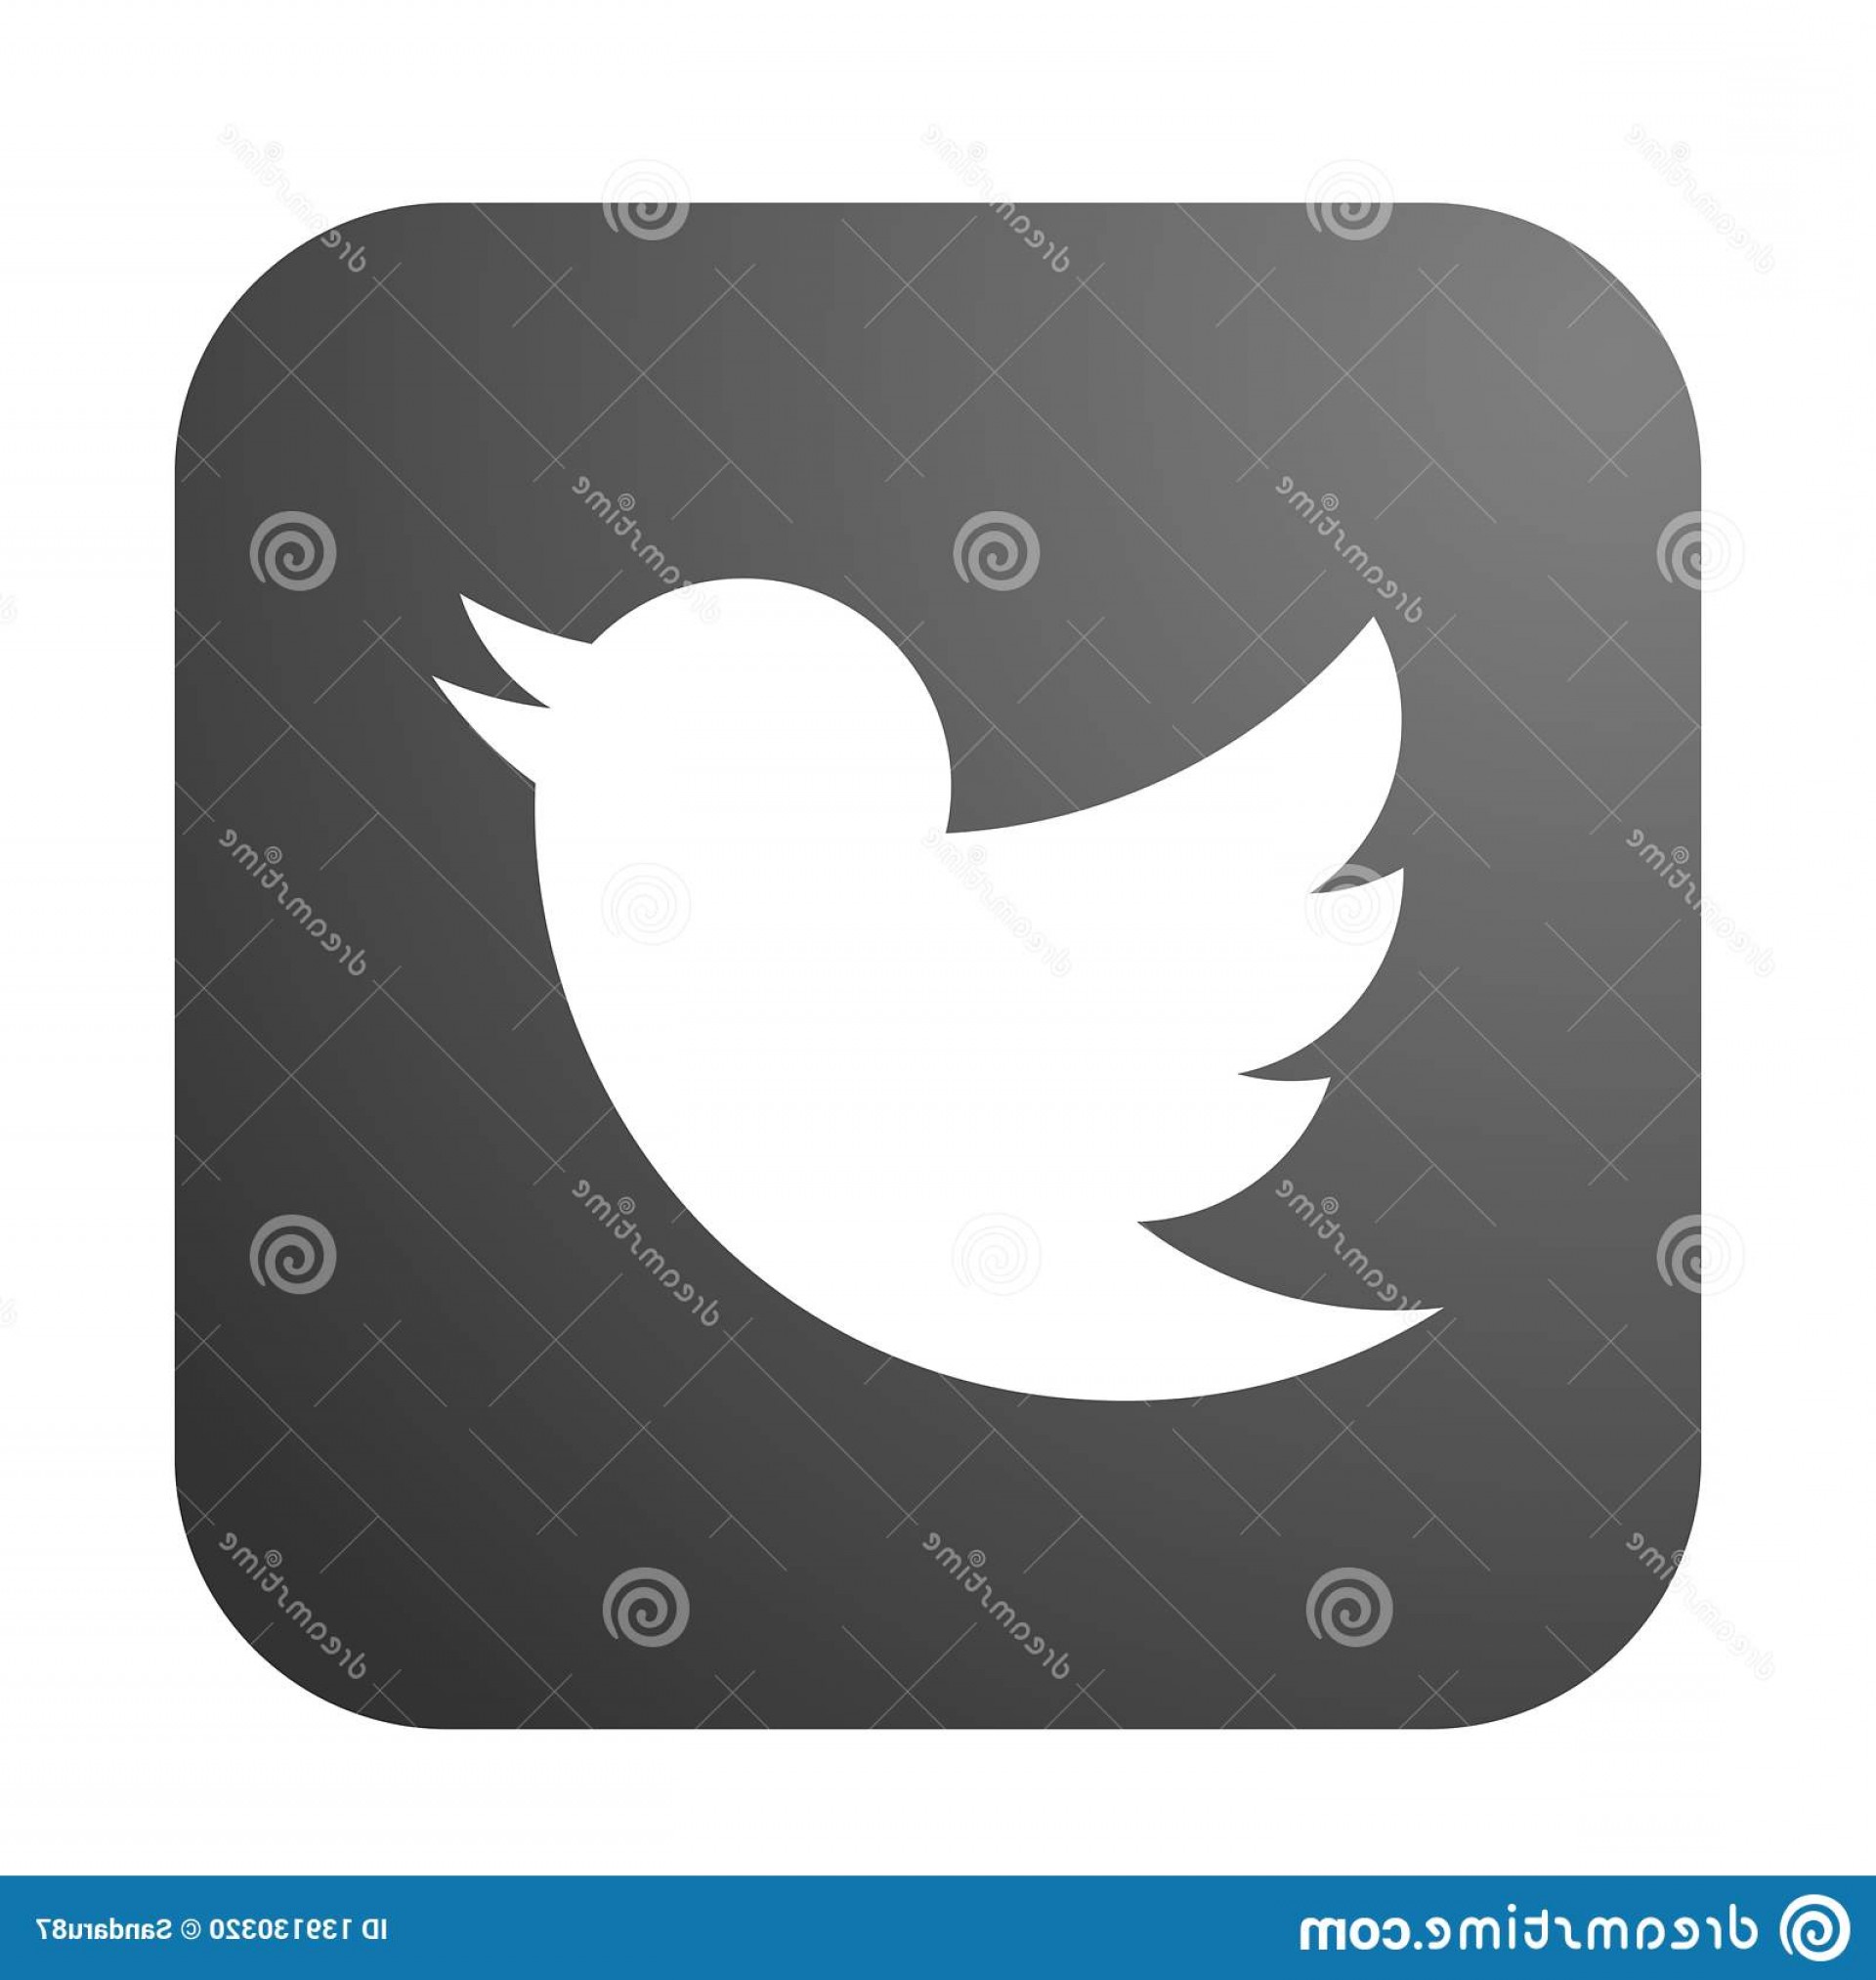 Twitter Bird Logo Vector at Vectorified.com | Collection of Twitter ...